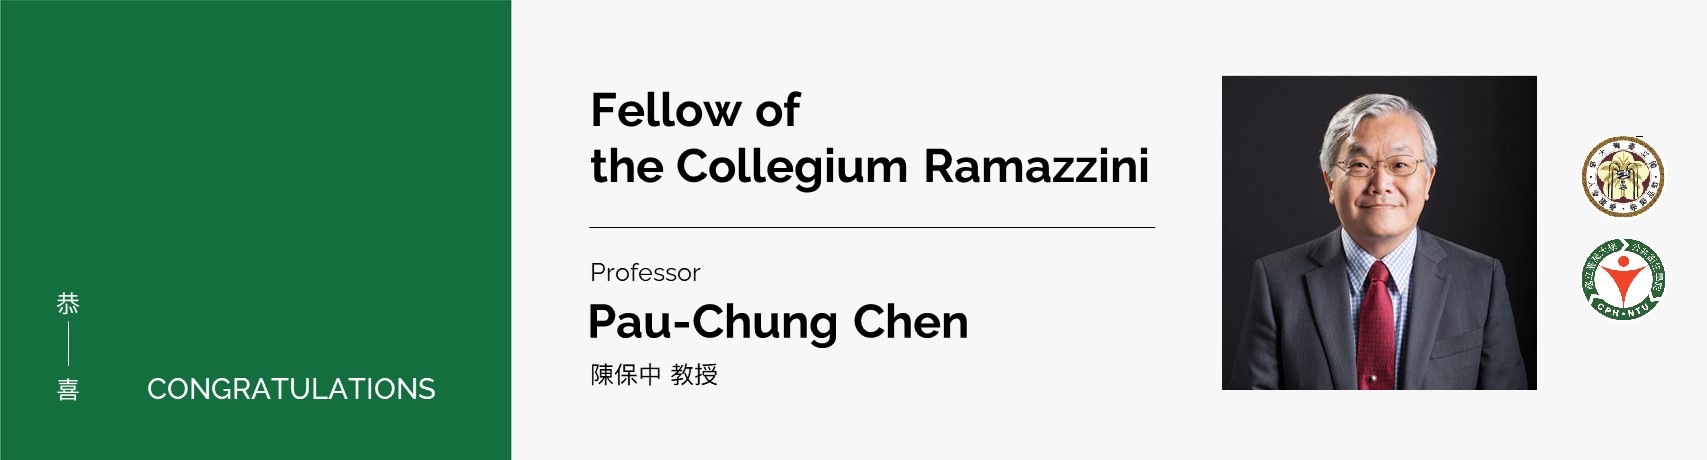 【Congratulations!】 EOHS Professor Pau-Chung Chen has been elected as a Fellow of the Collegium Ramazzini